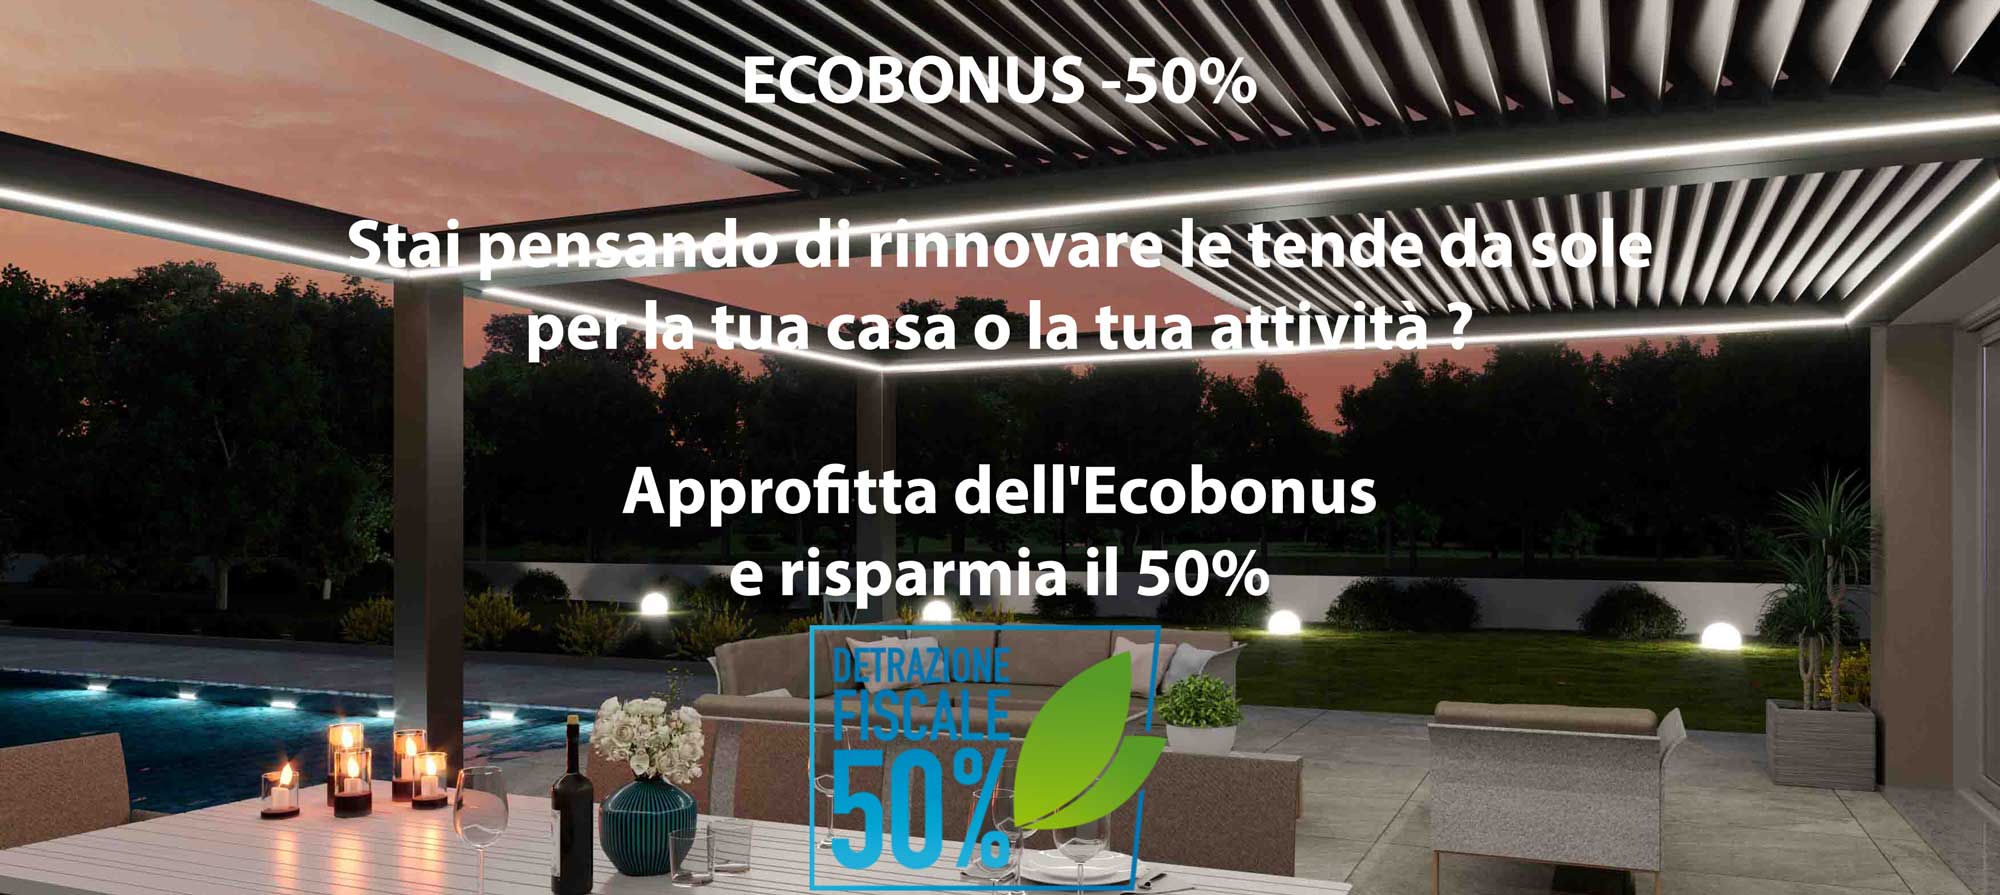 ecobonus50